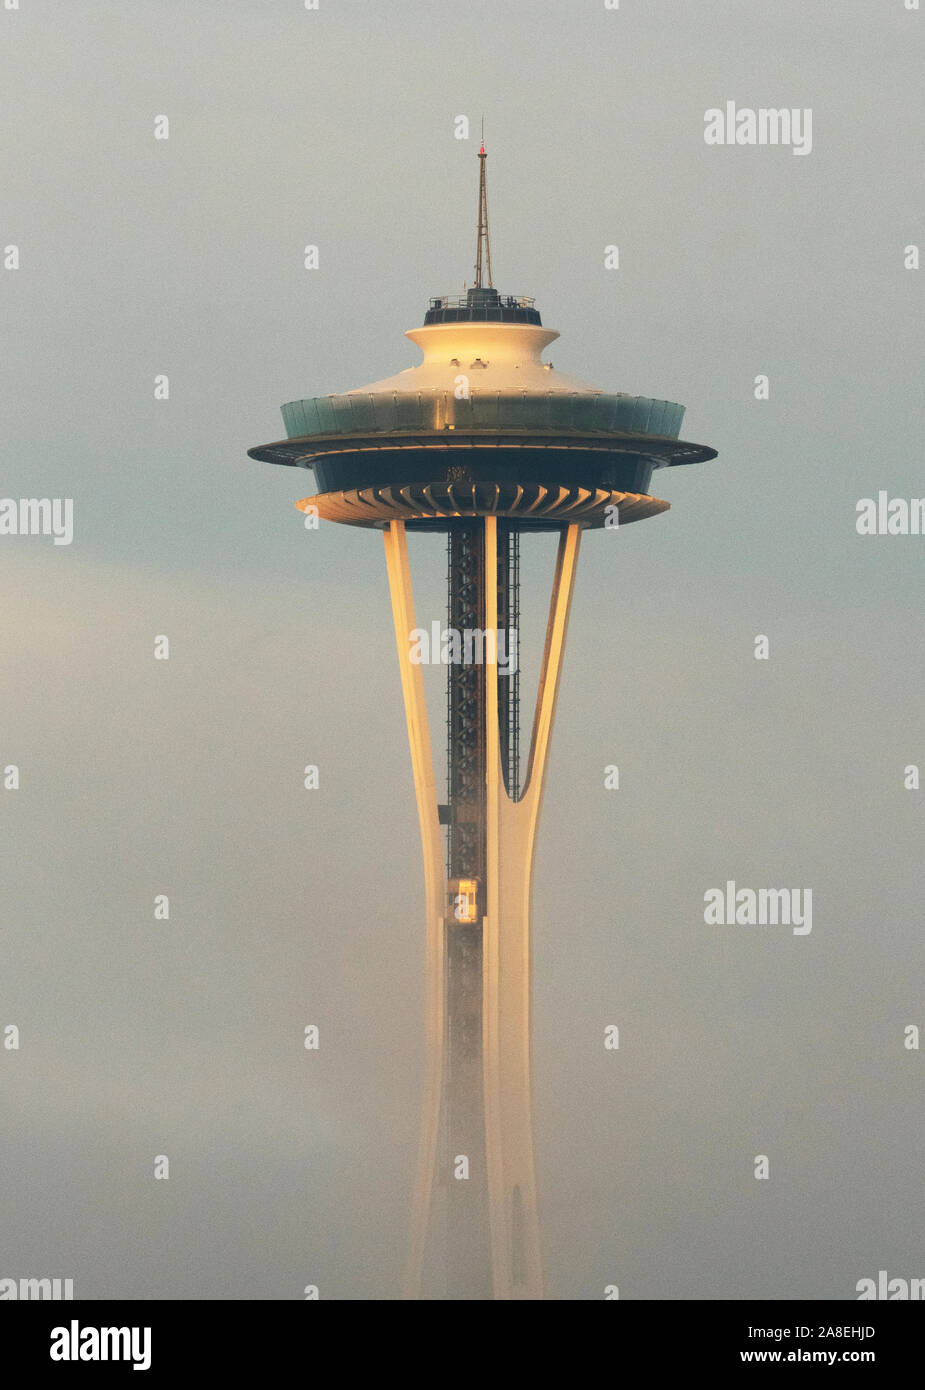 Space Needle on foggy winter morning, Seattle, Washington : Golden elevator descends into mist Stock Photo